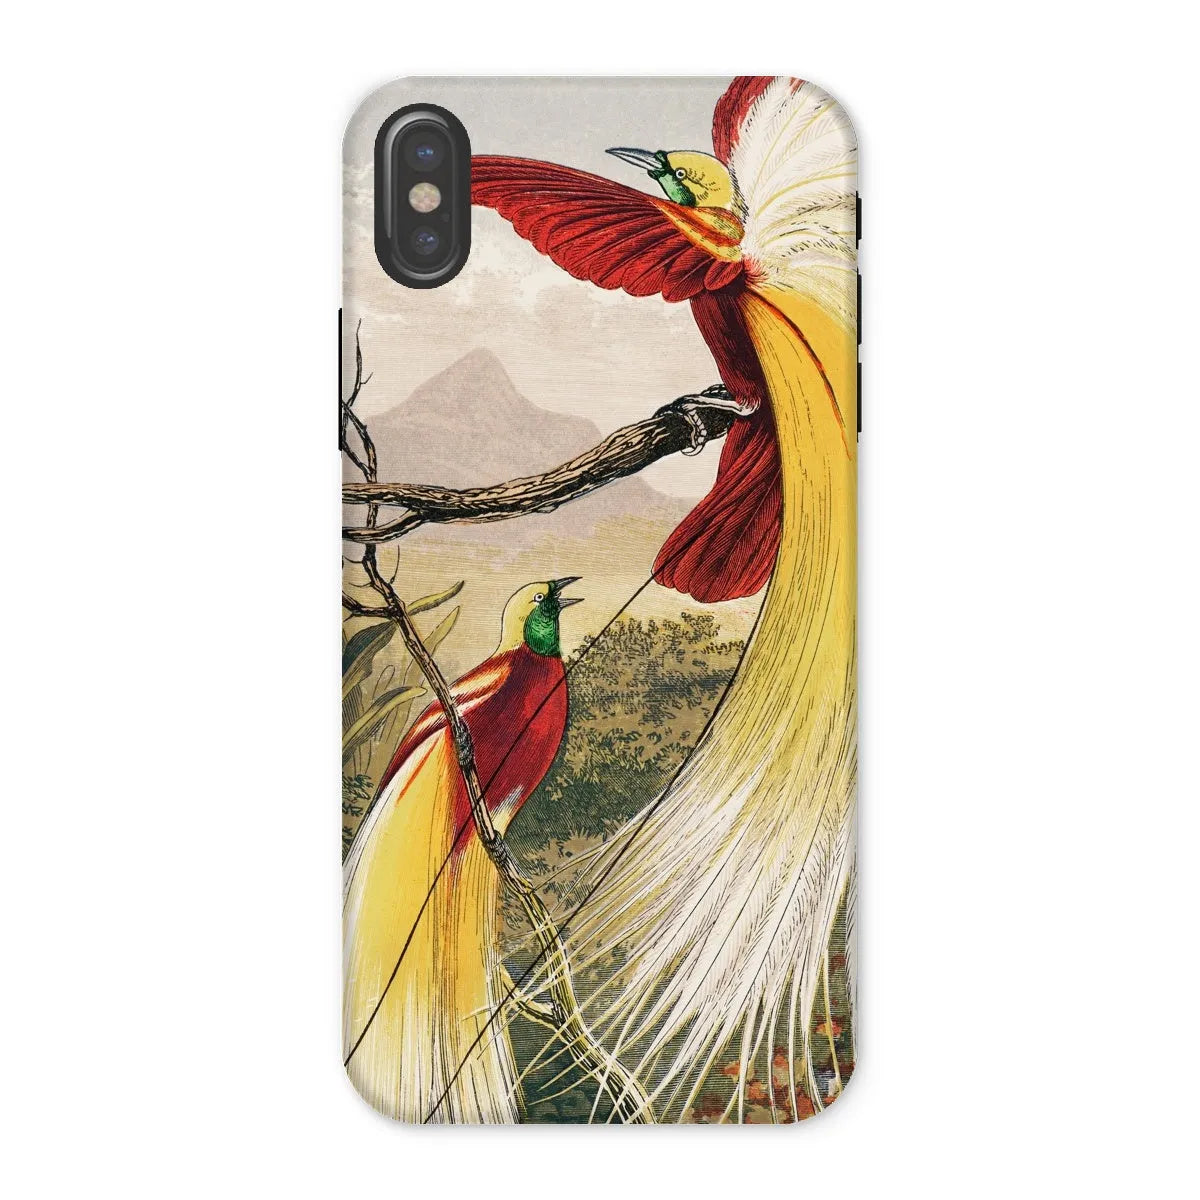 Bird Of Paradise - Animal Art Phone Case - Benjamin Fawcett - Iphone x / Matte - Mobile Phone Cases - Aesthetic Art